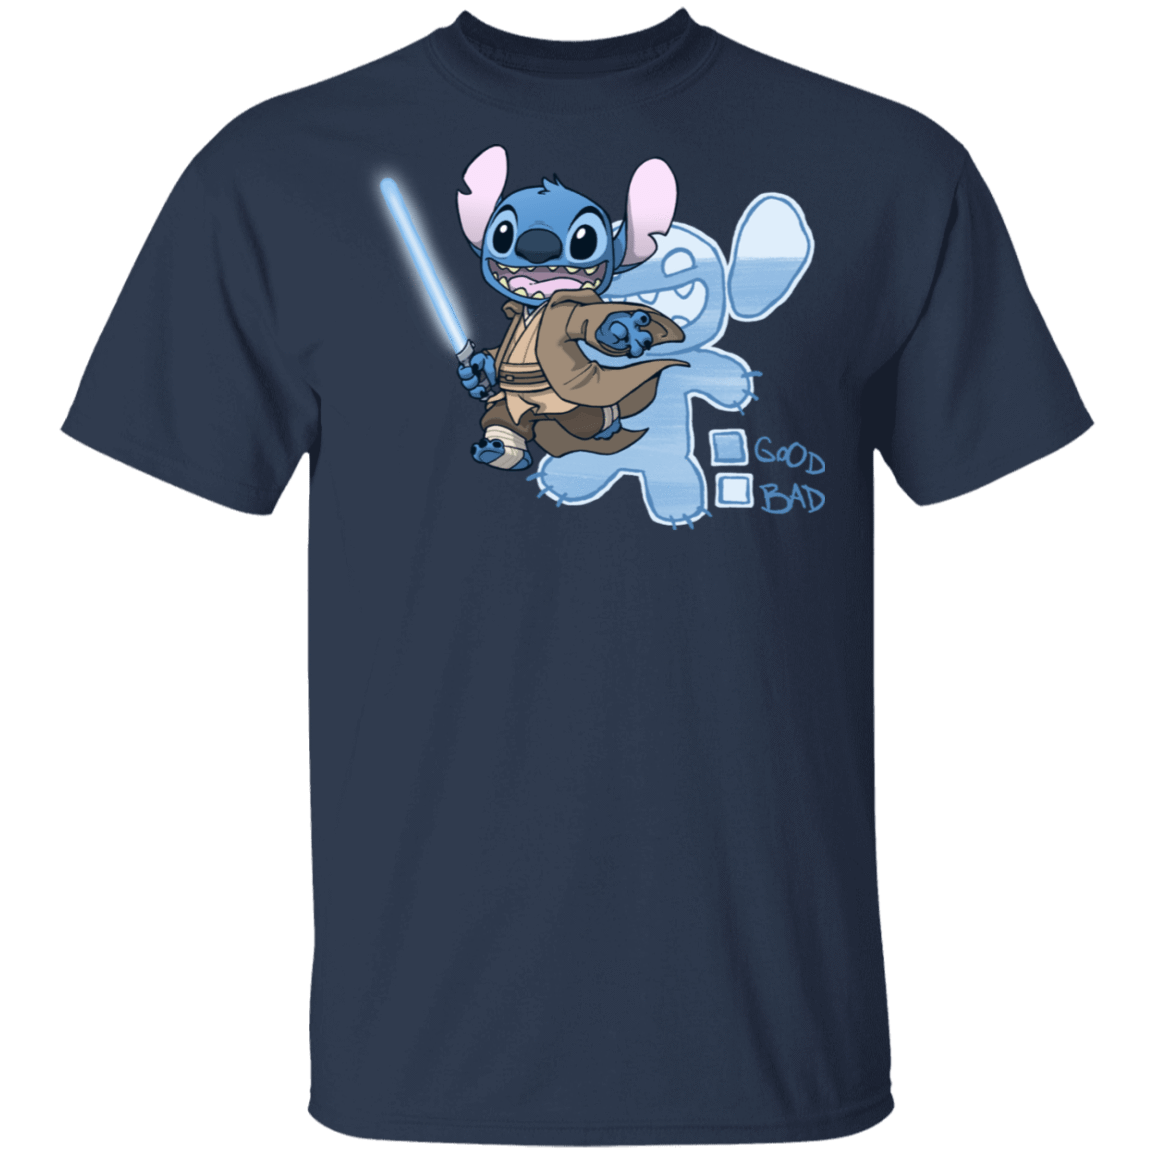 T-Shirts Navy / S Stitch Jedi T-Shirt